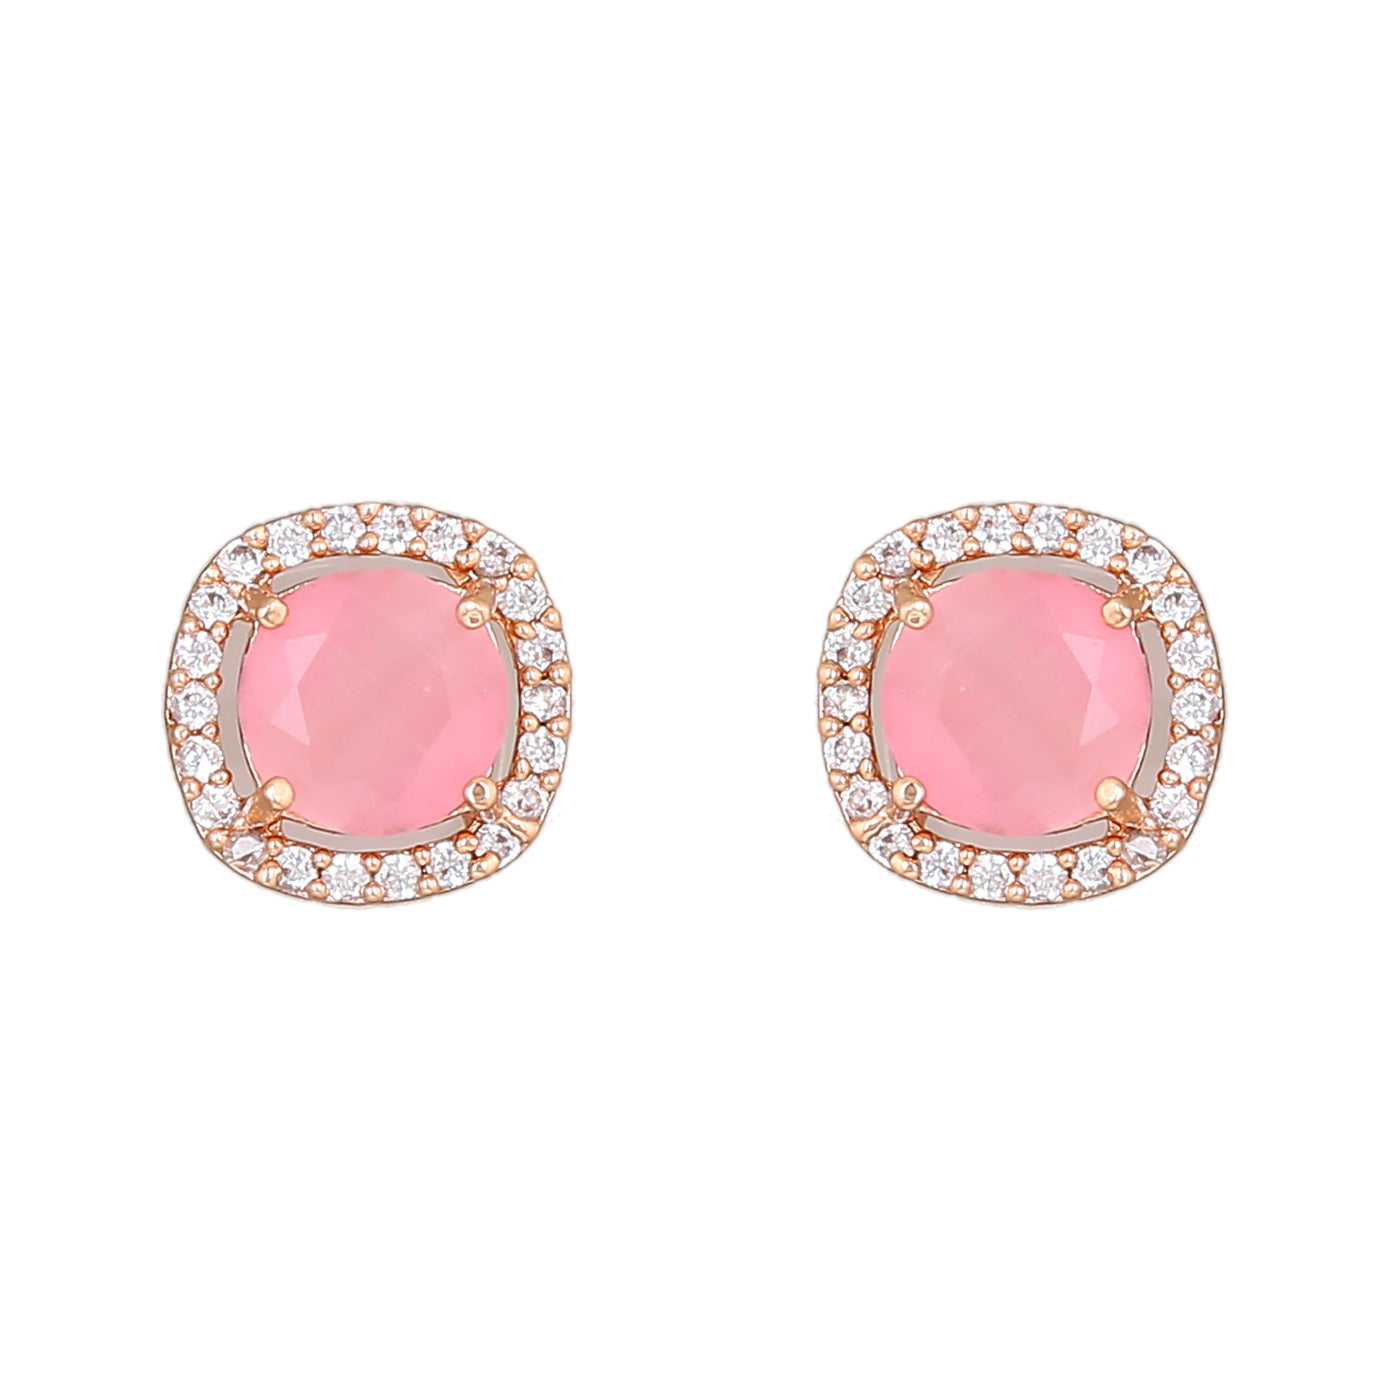 Estele Rose Gold Plated CZ Dazzling Square Designer Mangalsutra Necklace Set with Mint Pink Stones for Women